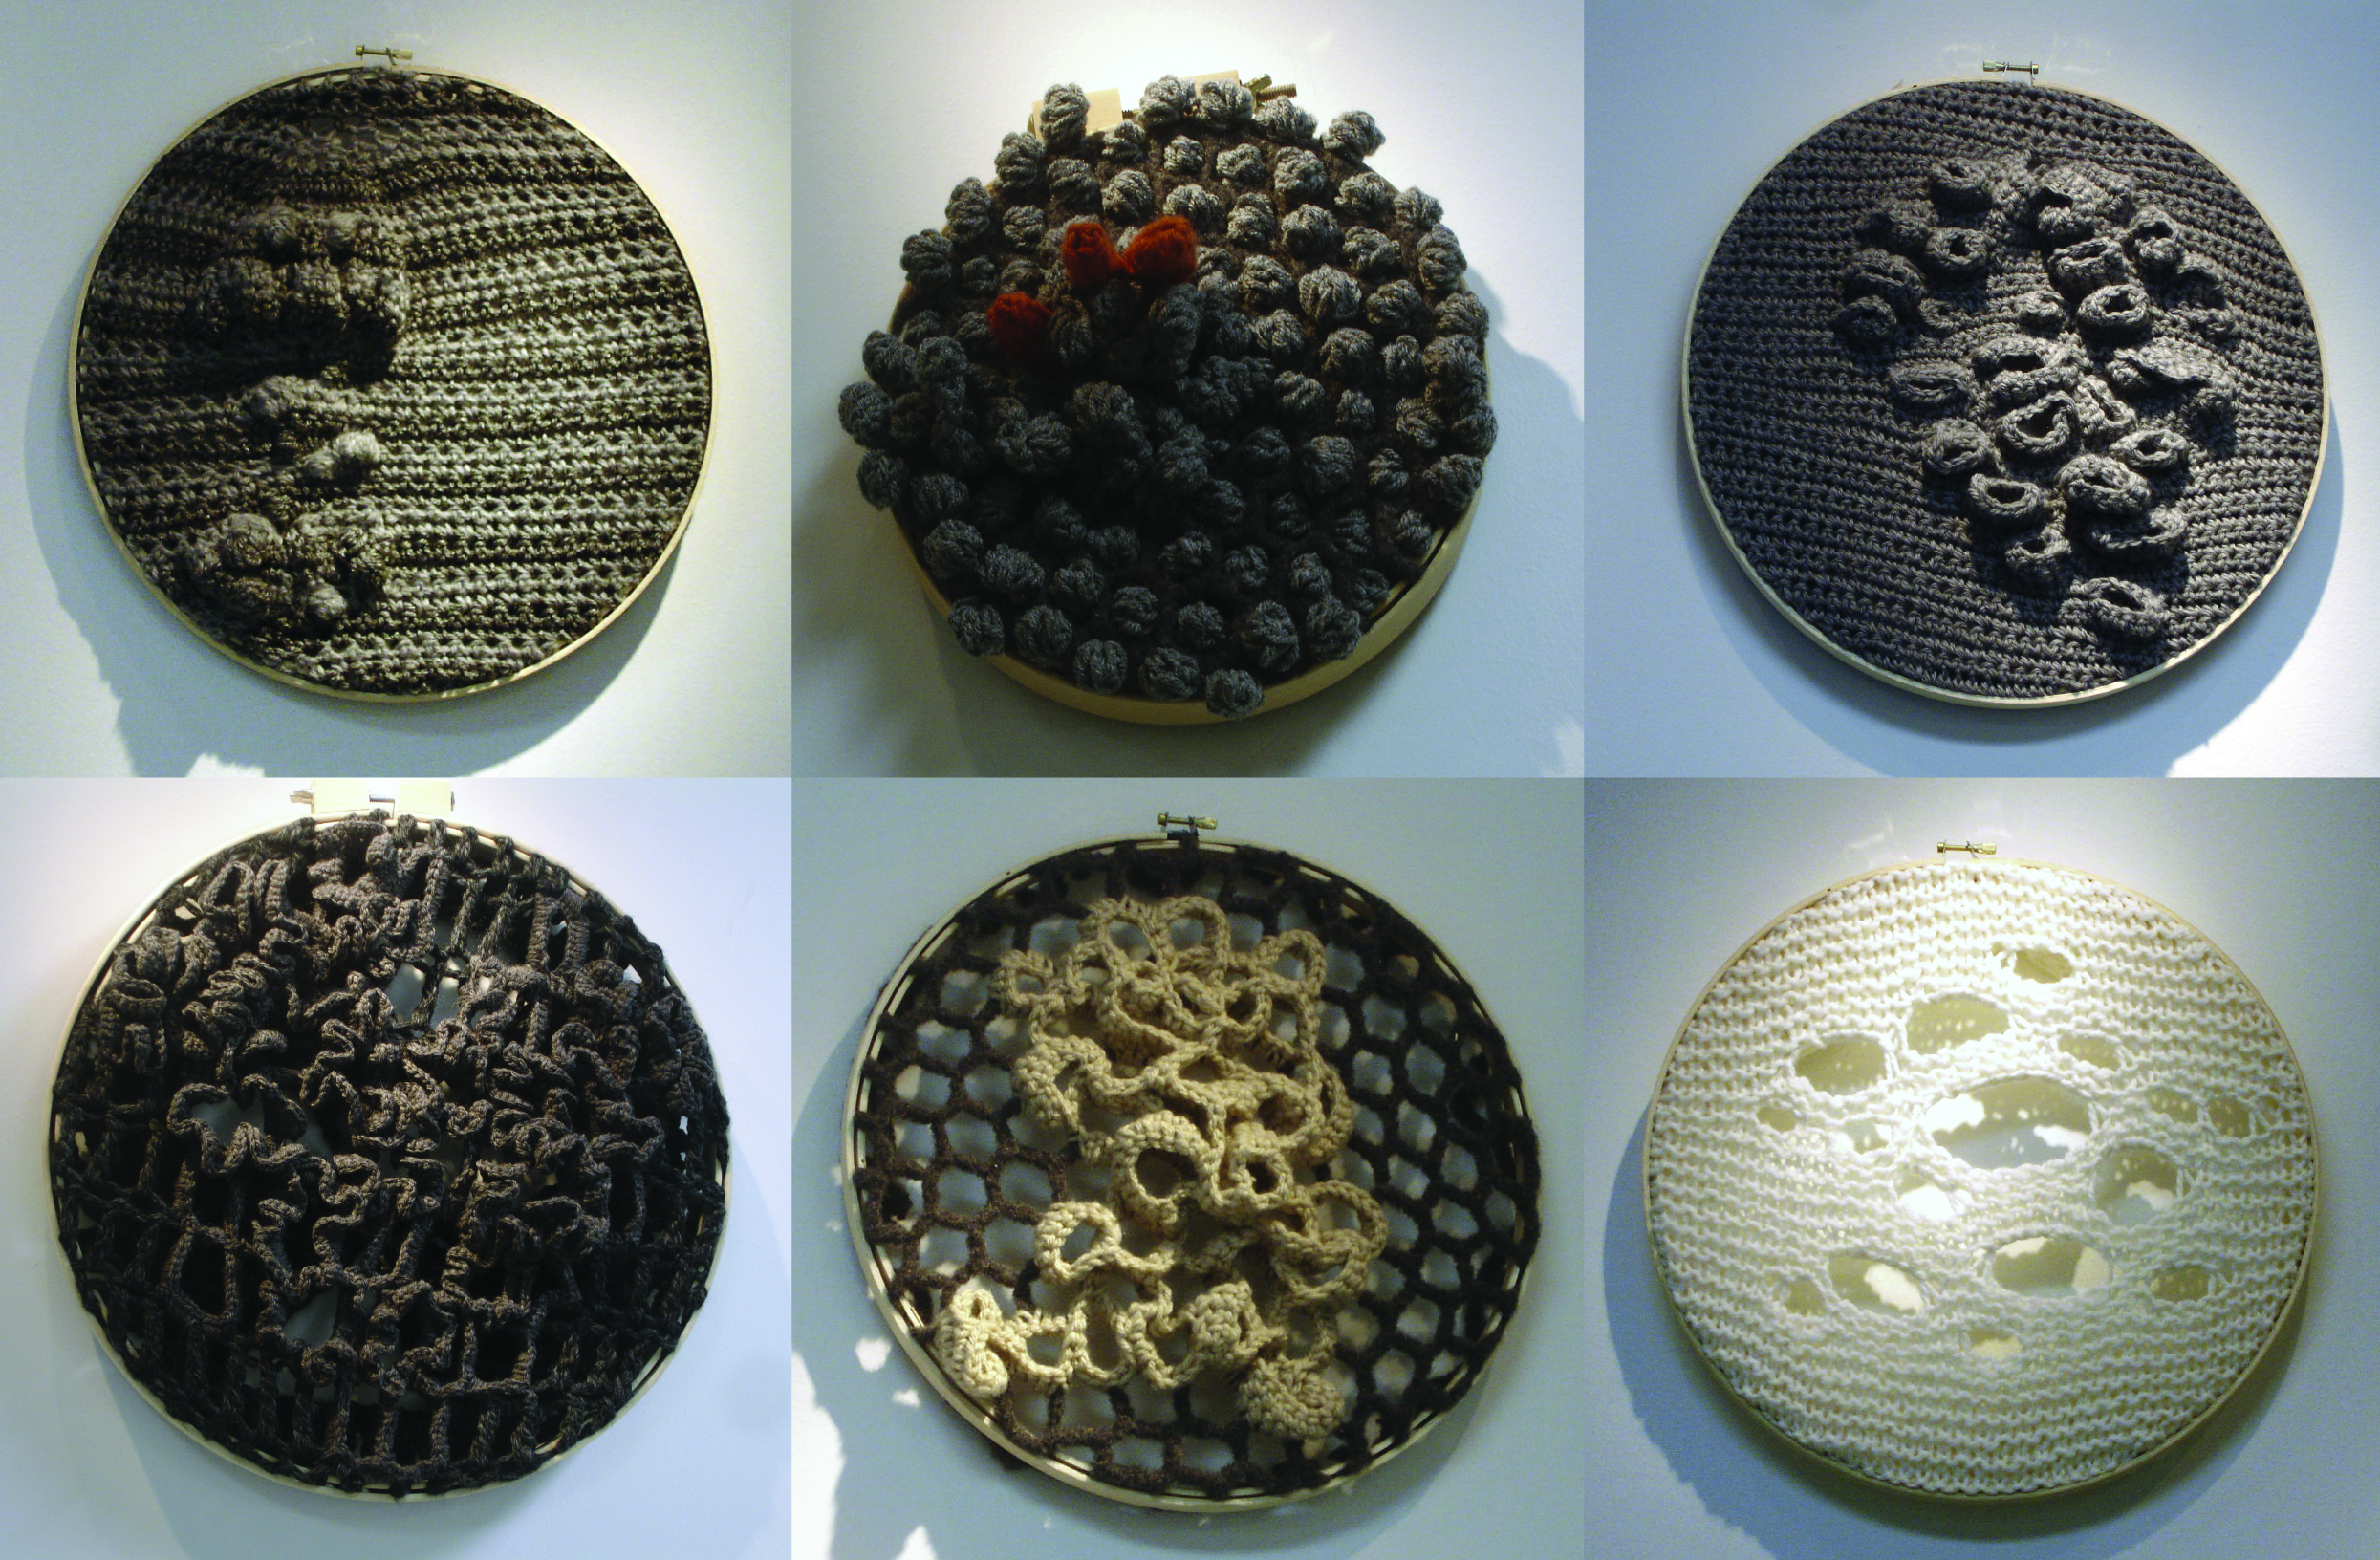 Silva Regon - Neoplastic knitting, California Nanosystems Institute, 2008 (źródło: materiał prasowy organizatora)